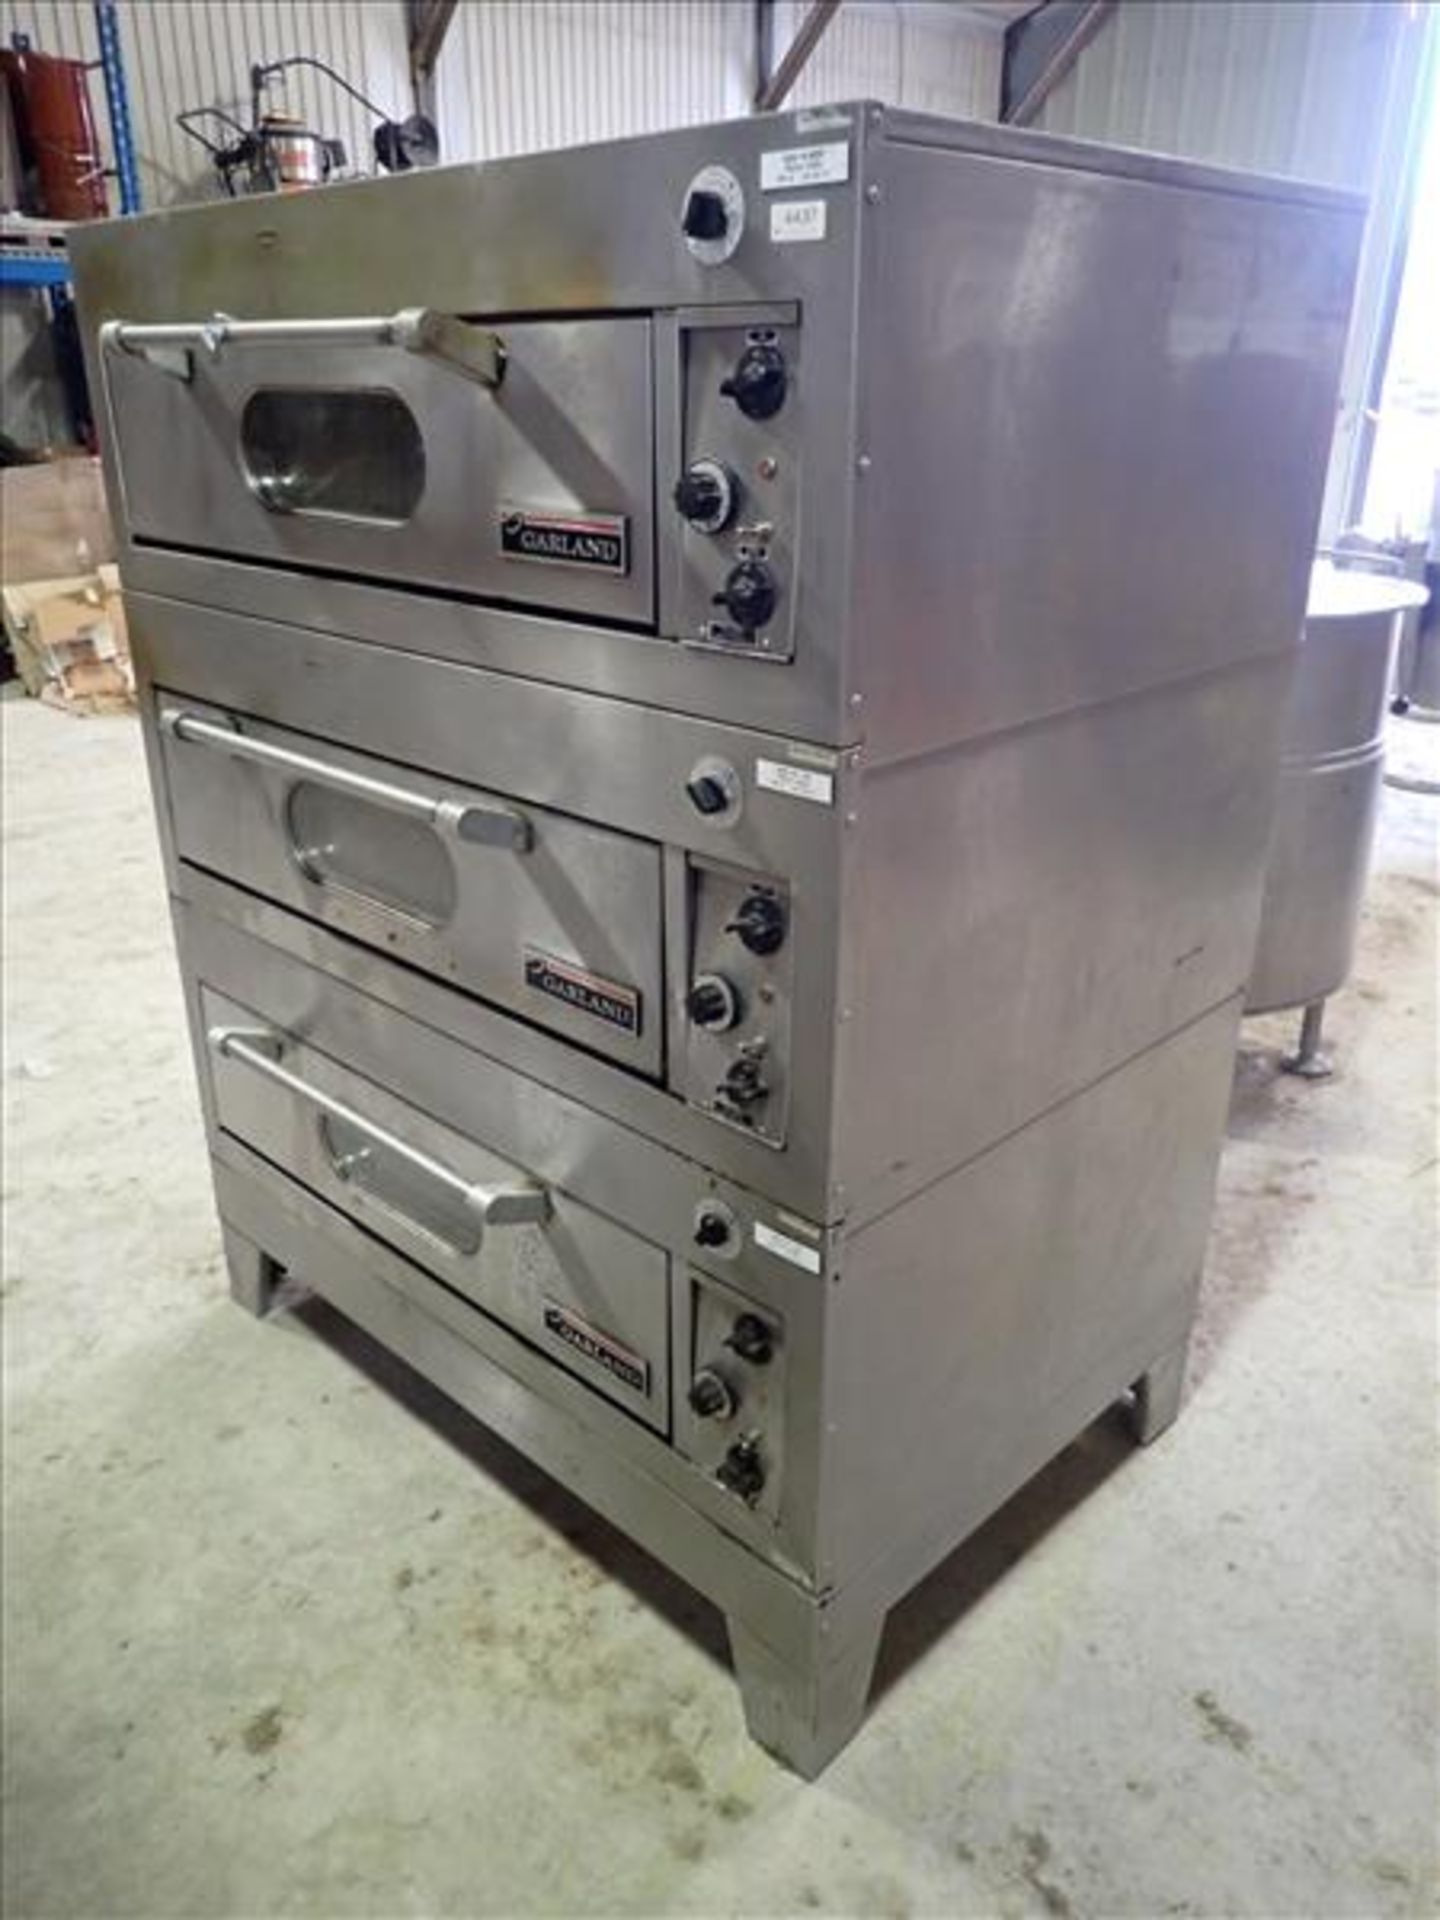 Garland Pizza Oven, 3-section, 42 in. (Tag No. 4437) [Sea Container 971037-8] {Location Hallnor}